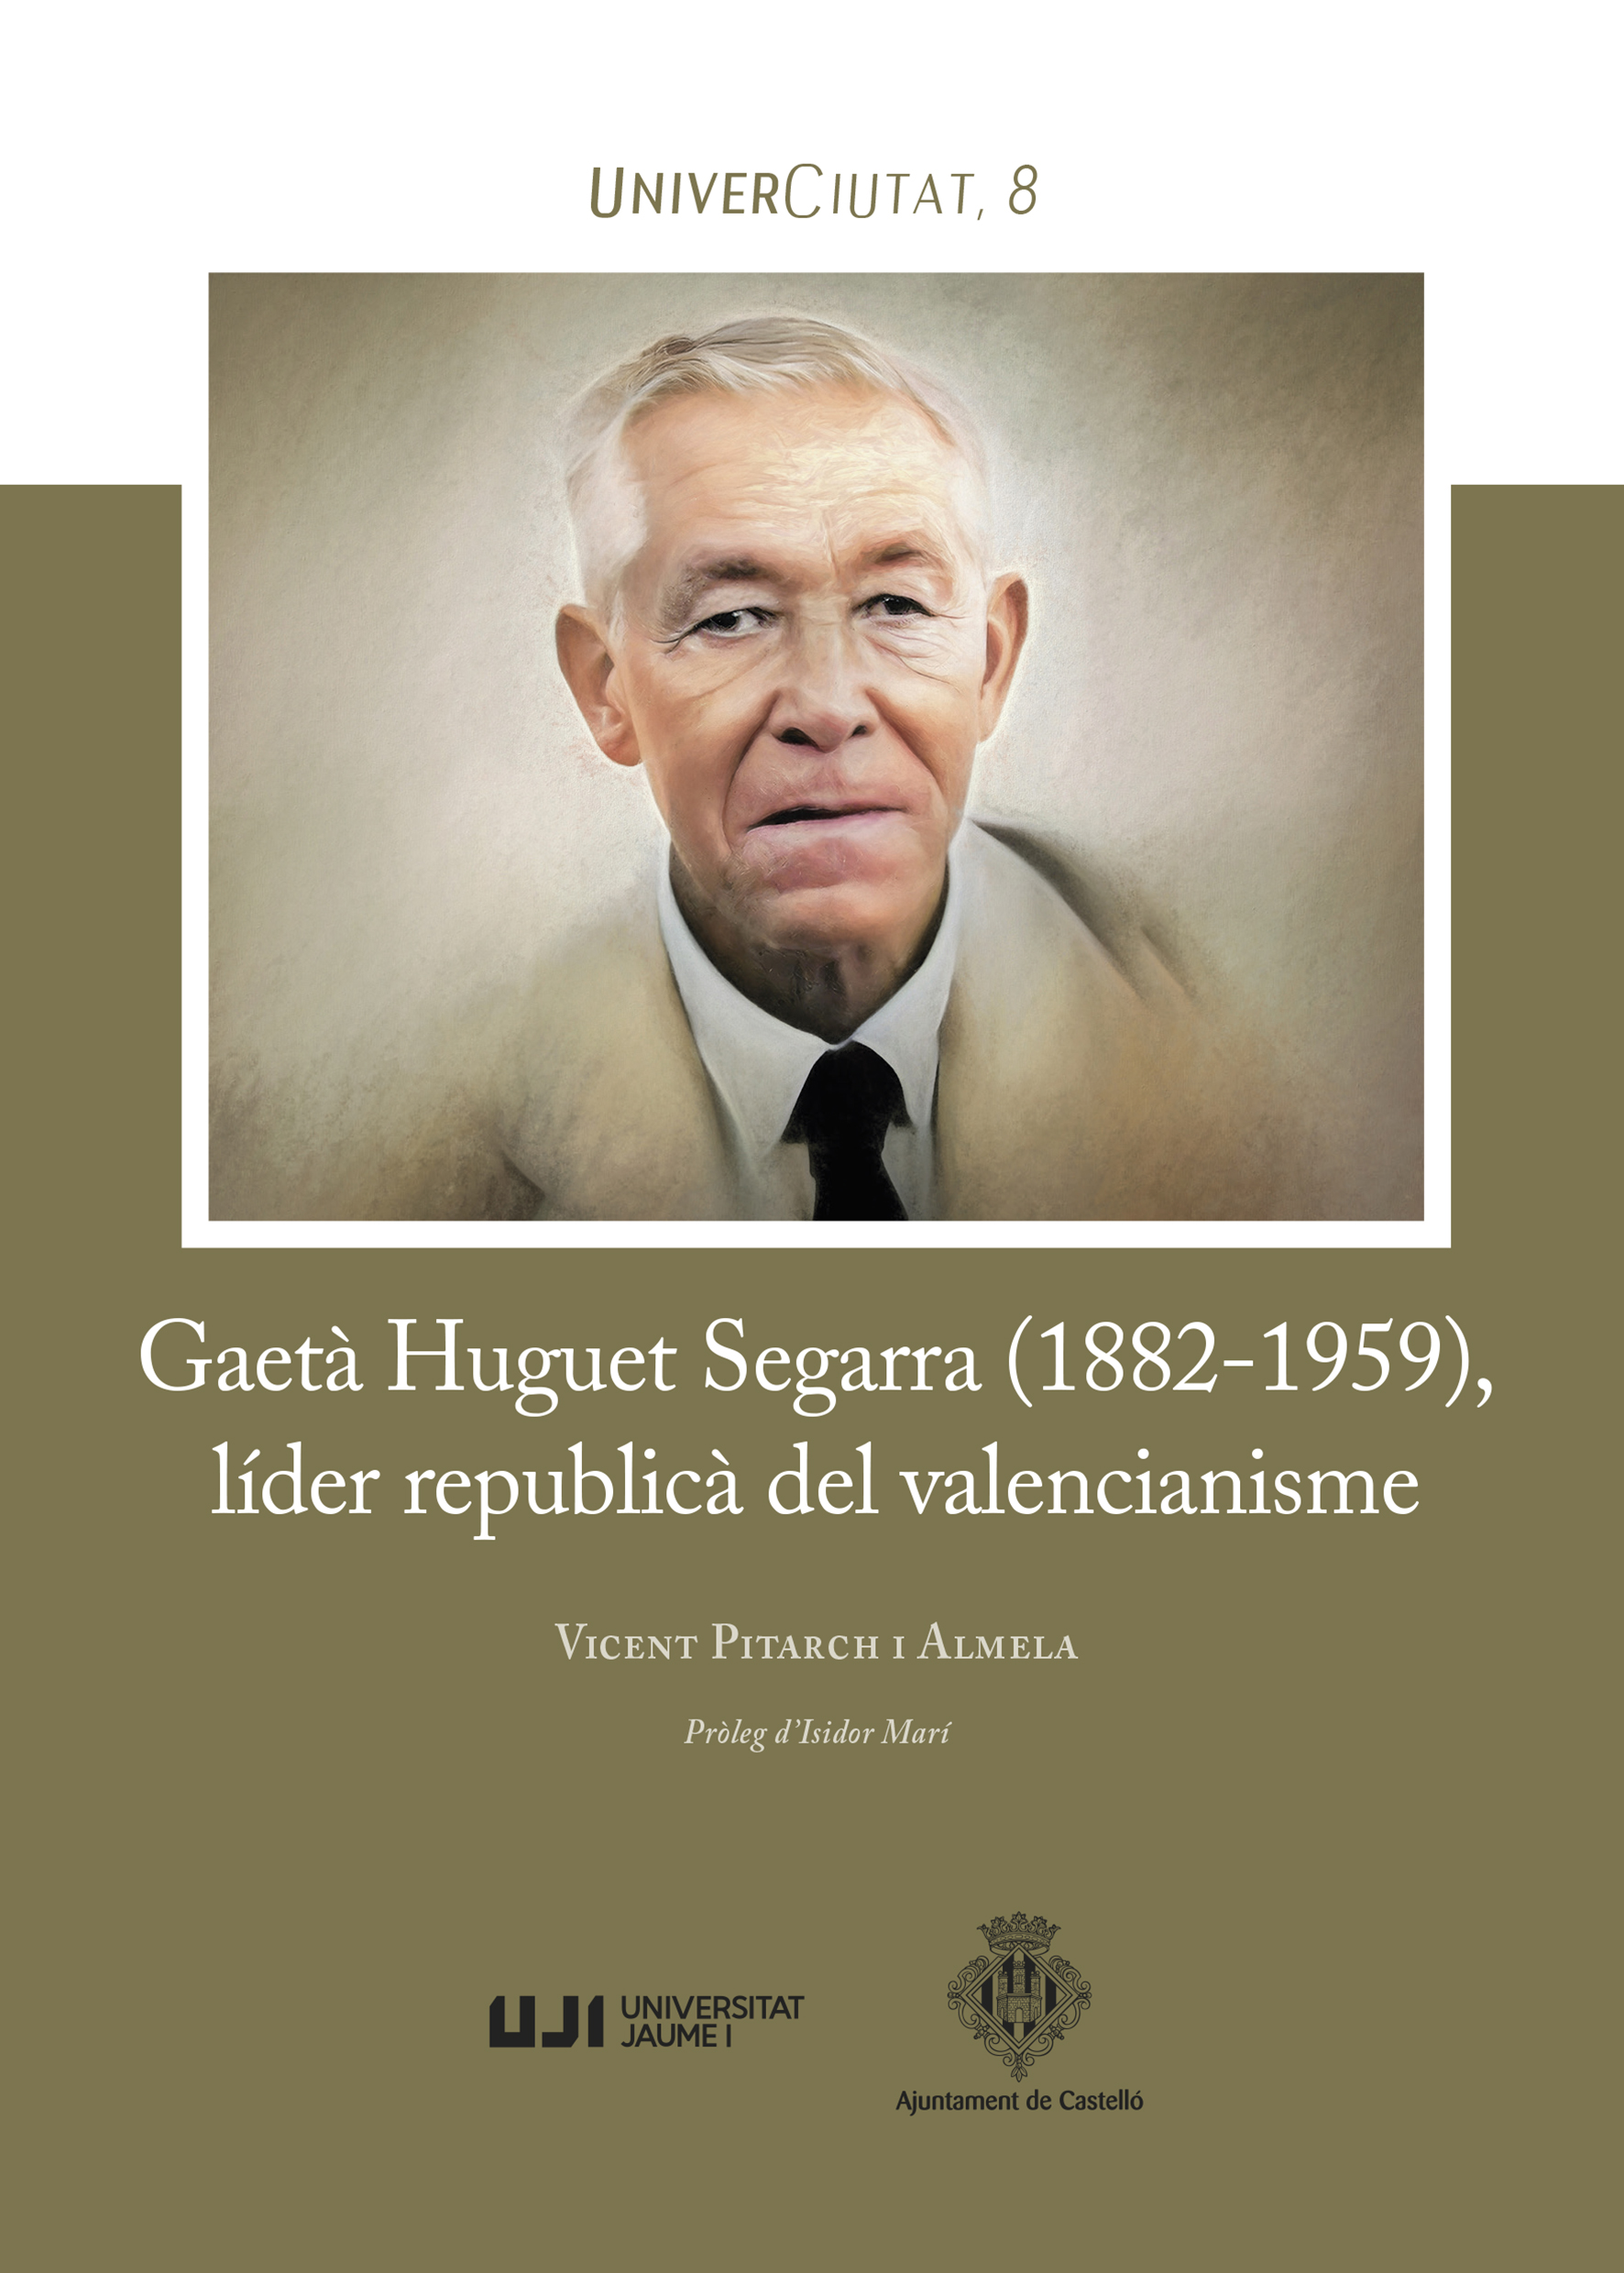 Gaetà Huguet Segarra (1882-1959)